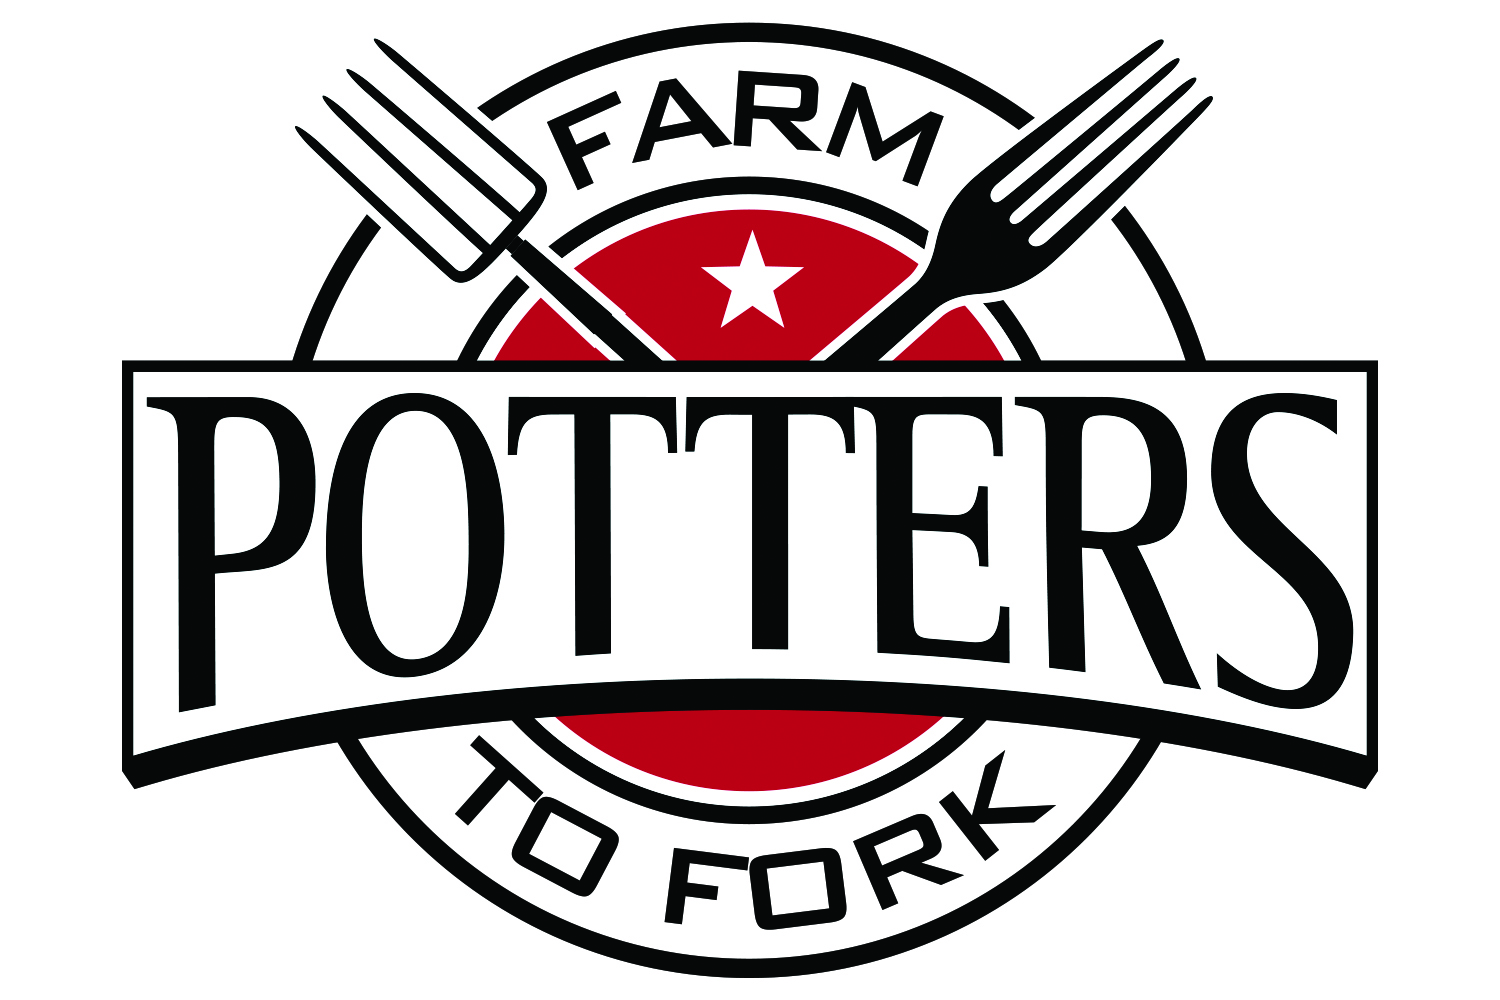 Potters Farm to Fork CMYK.jpg